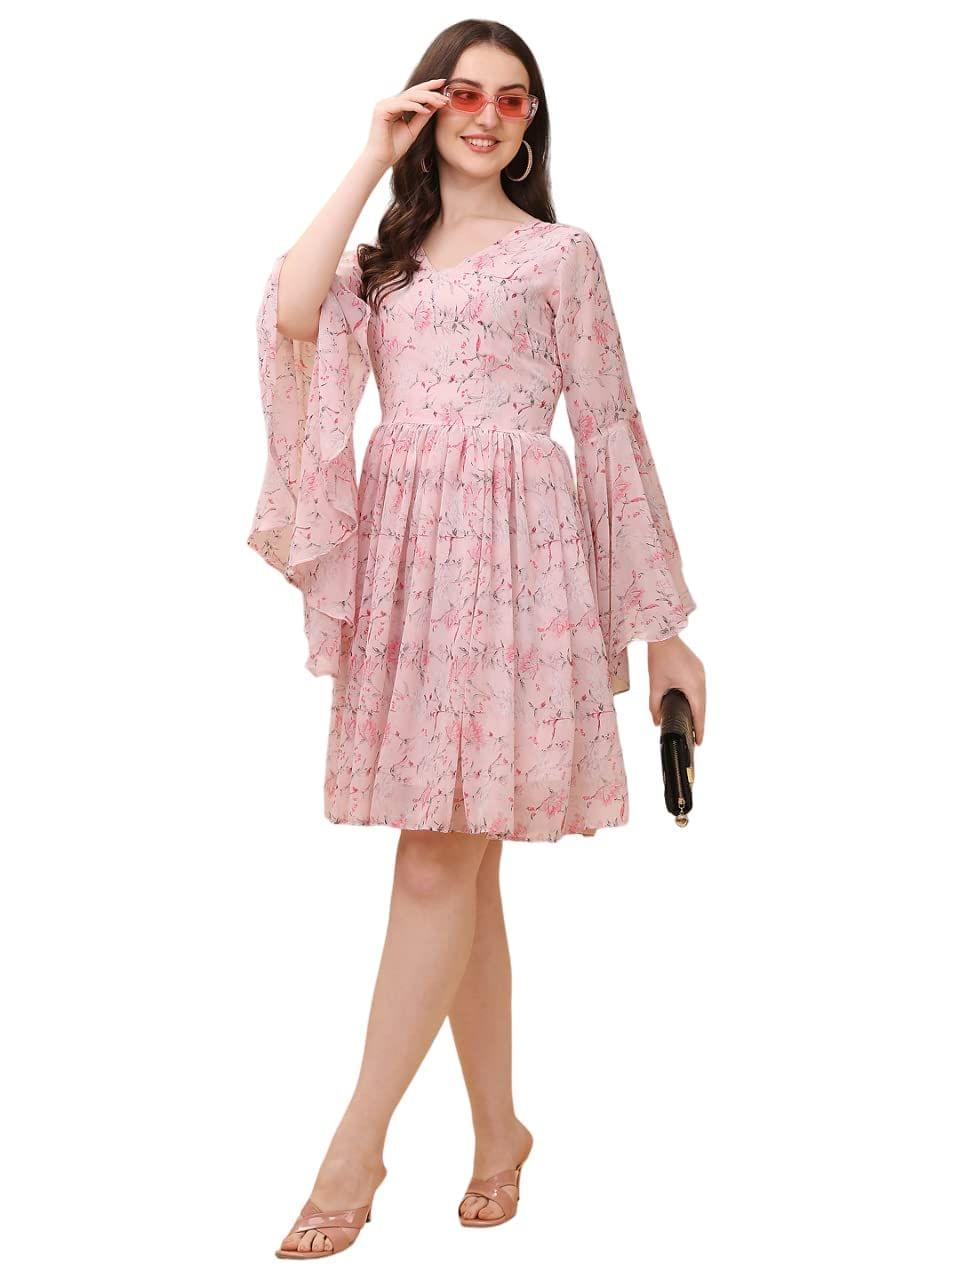 65.98] Pink Lace Elegant Semi Formal Dress With Half Sleeves #J1588 -  GemGrace.com | Formal dresses, Beaded dress, Best wedding guest dresses